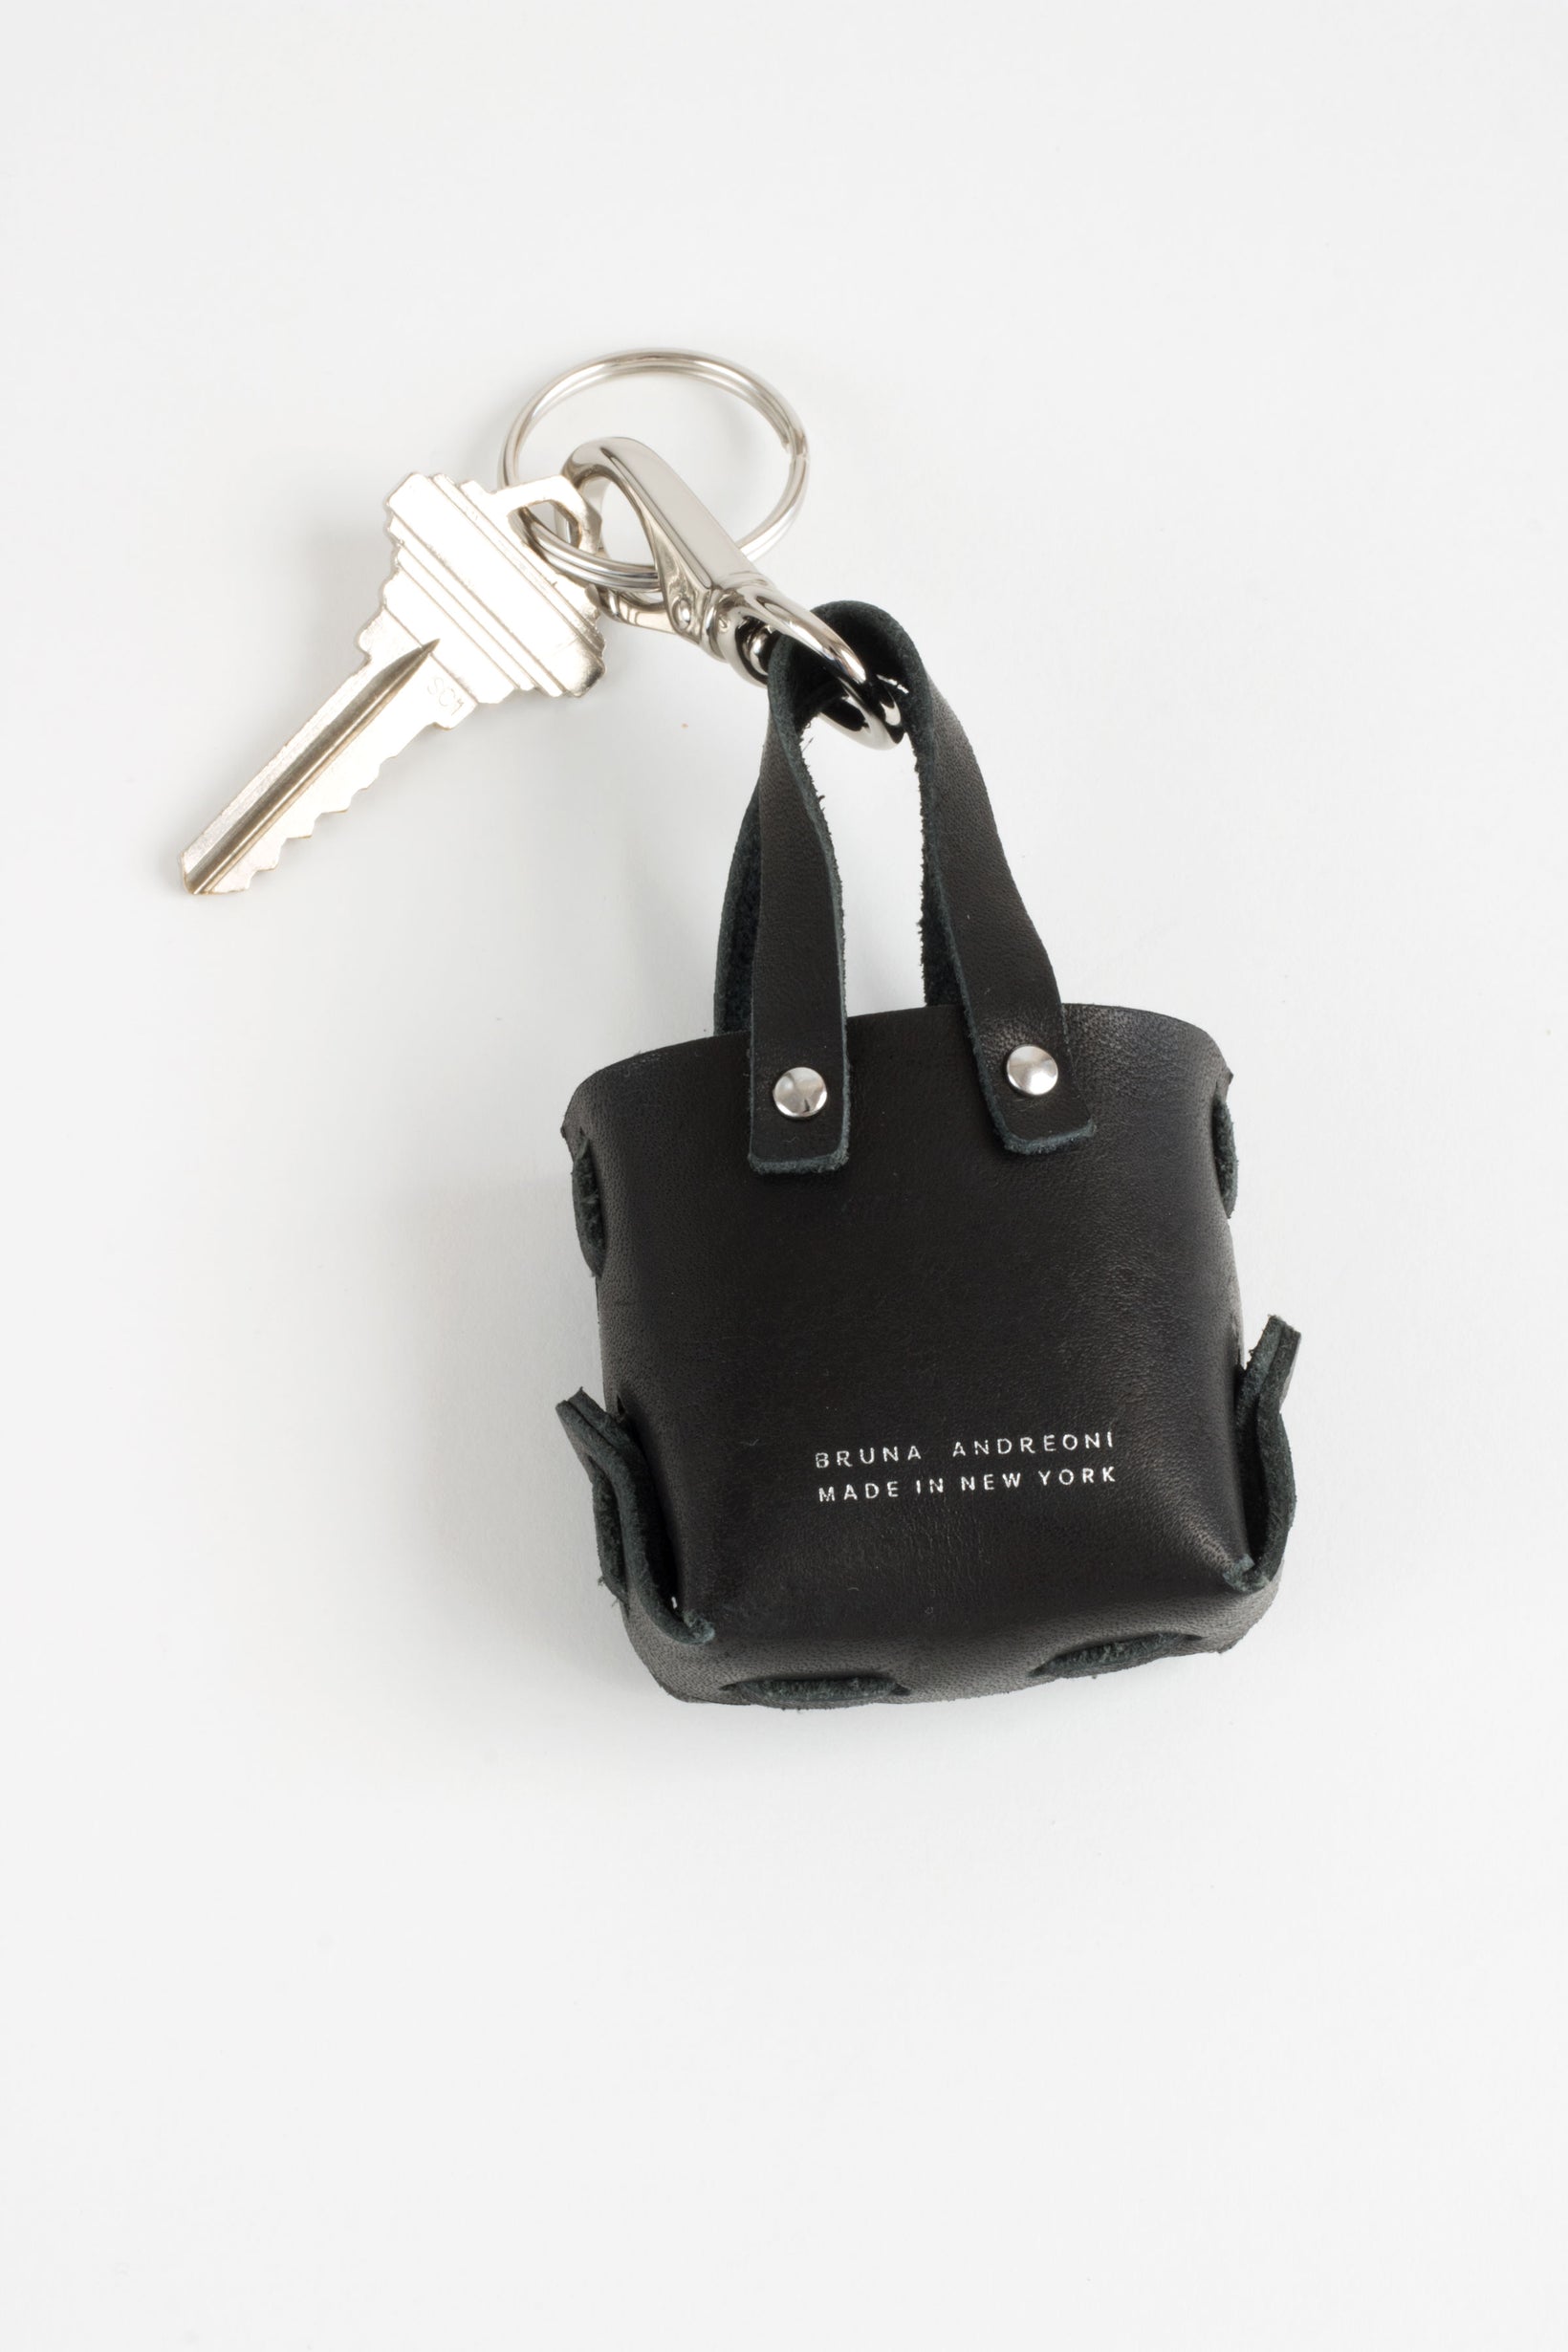 Bruna Andreoni Key Charm Black / Silver